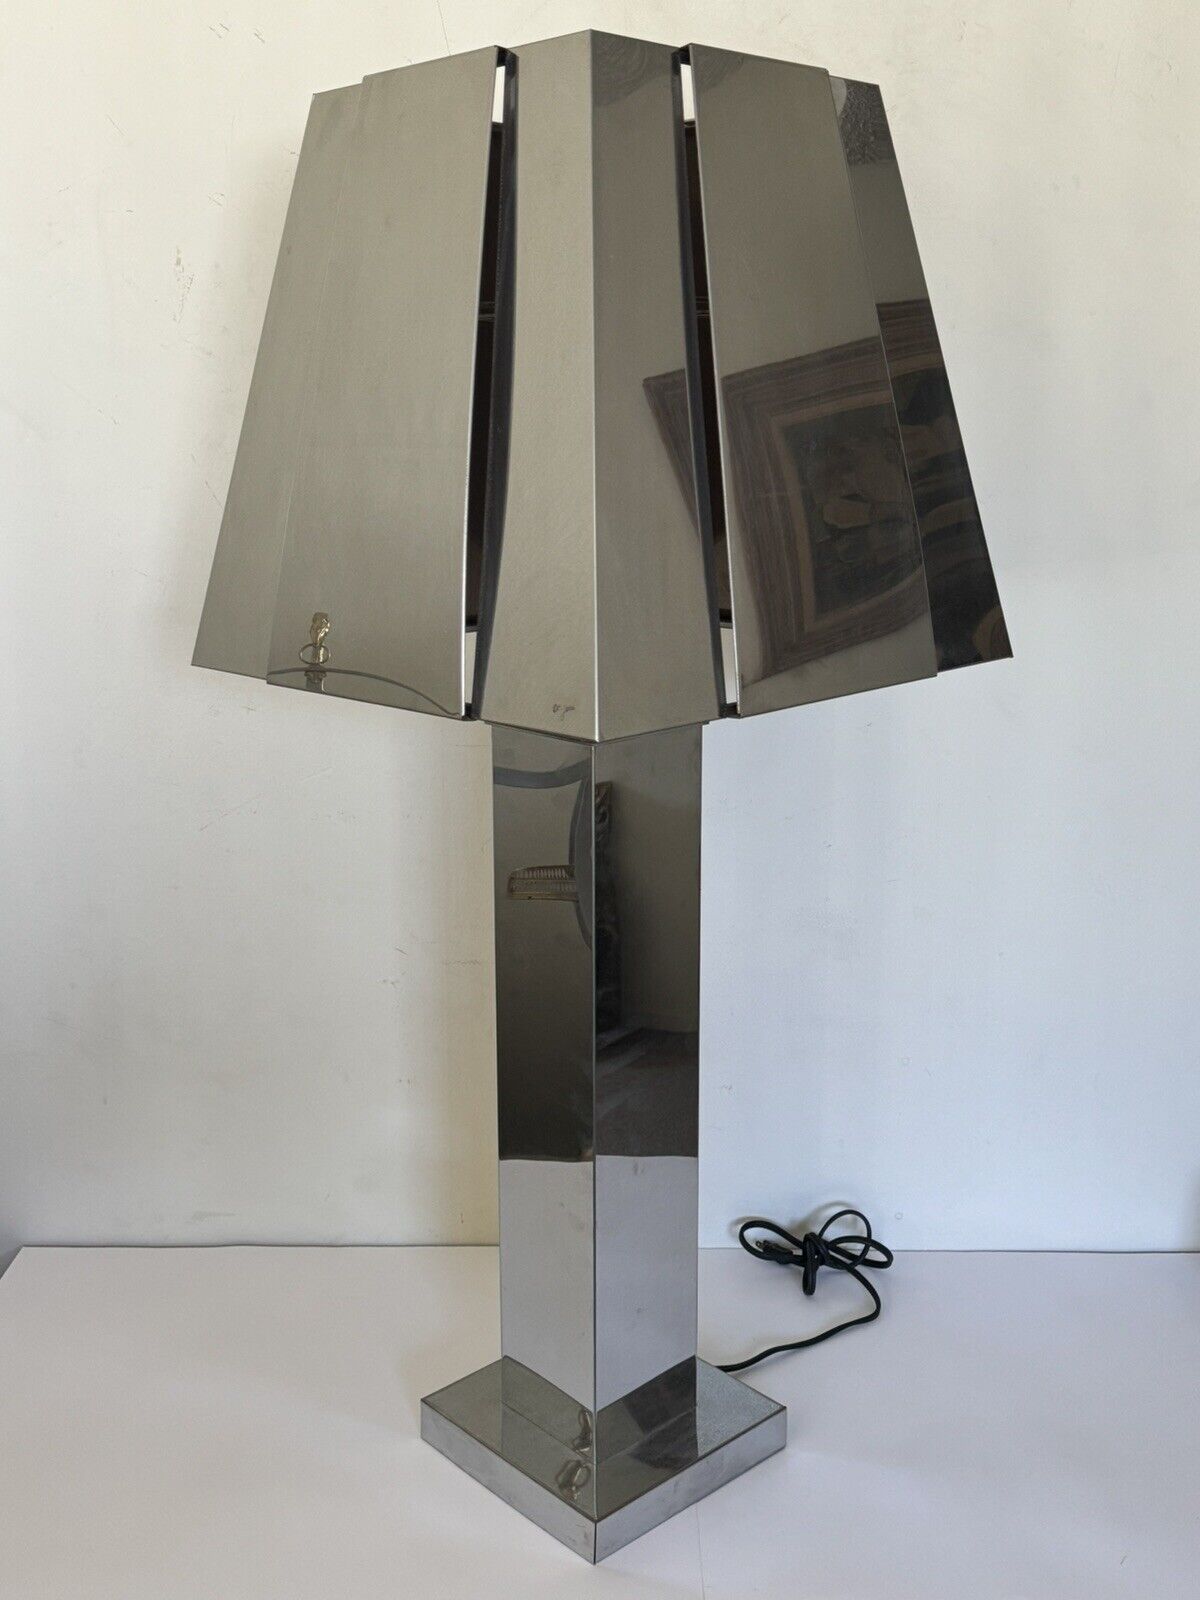 HUGE C JERE VINTAGE MODERN CHROME SCULPTURAL TABLE LAMP OLD ABSTRACT SCULPTURE